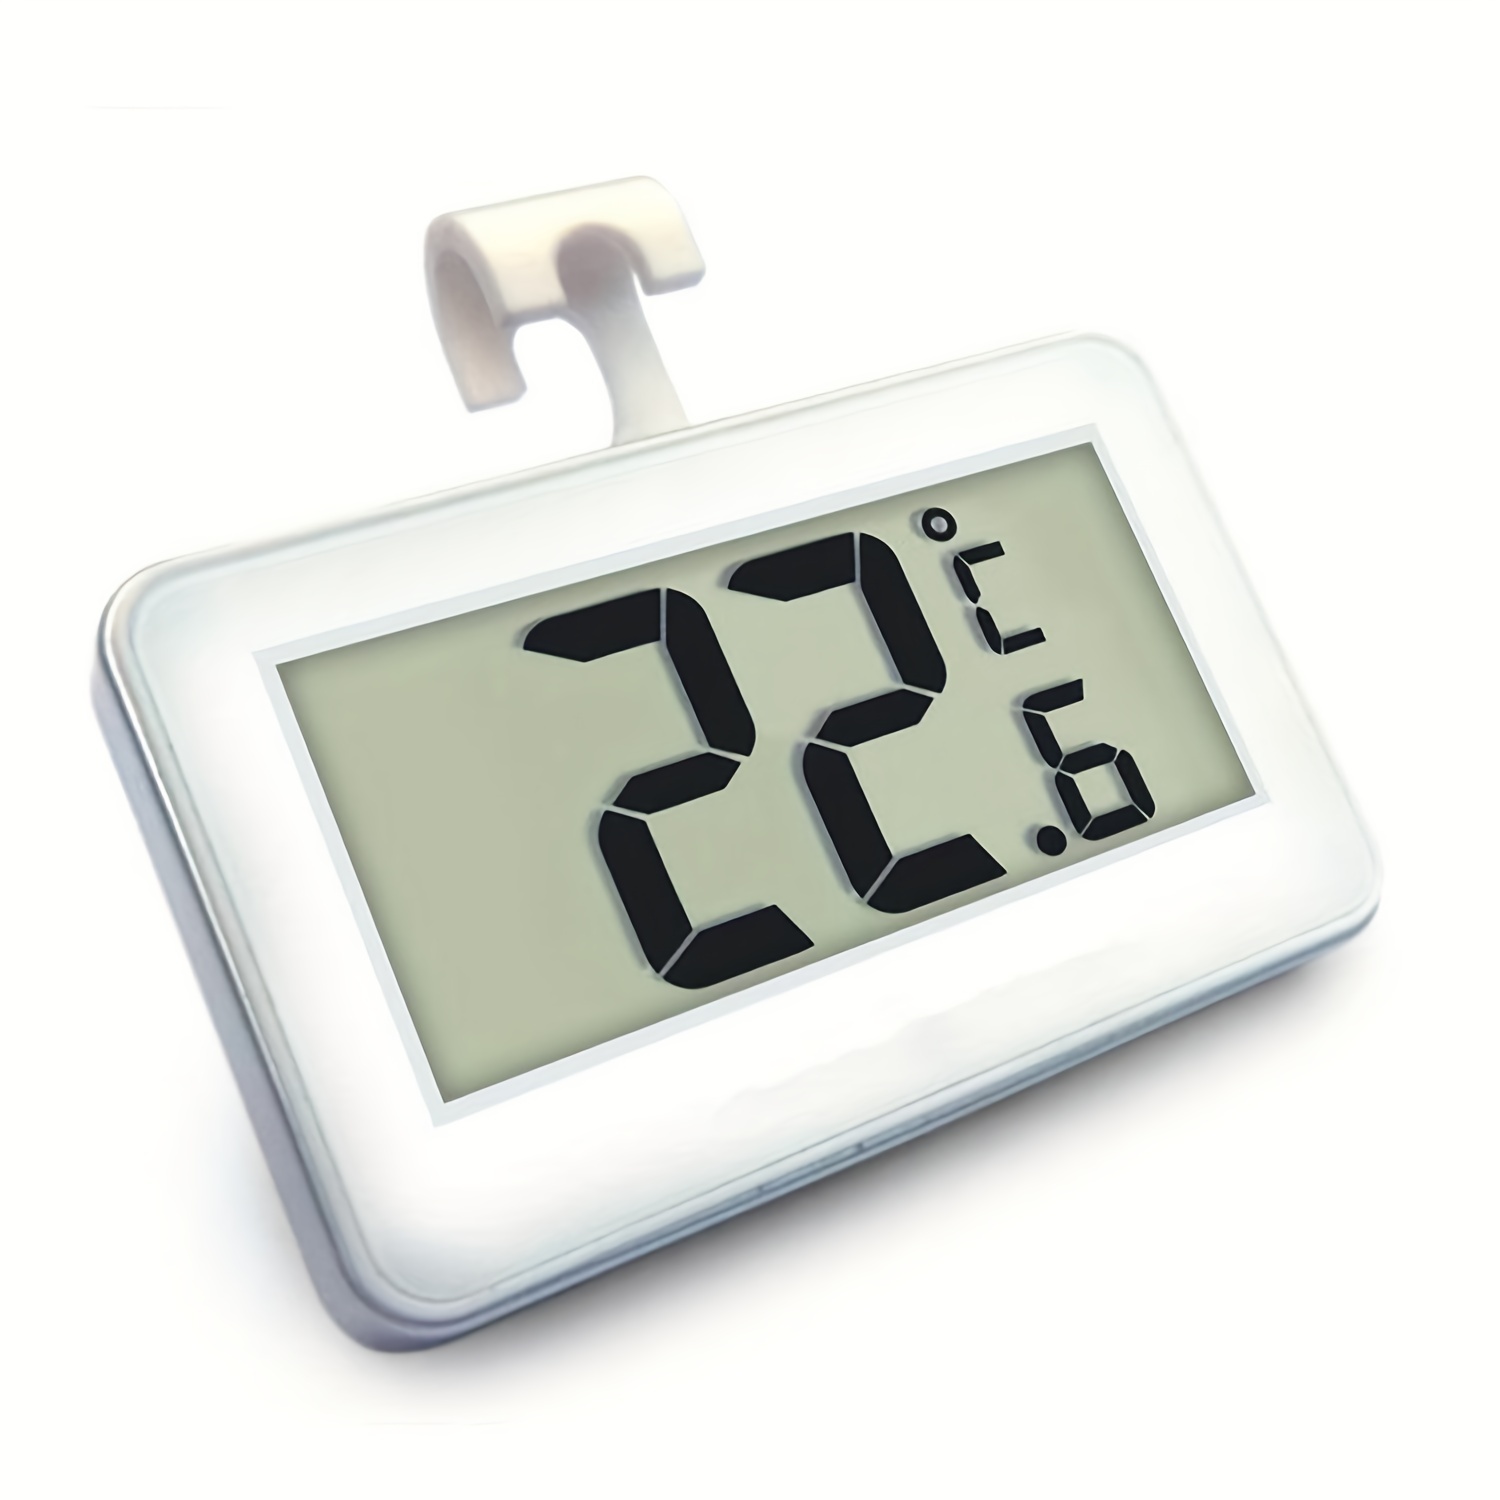 Refrigerator Fridge Thermometer Digital Freezer Room - Temu